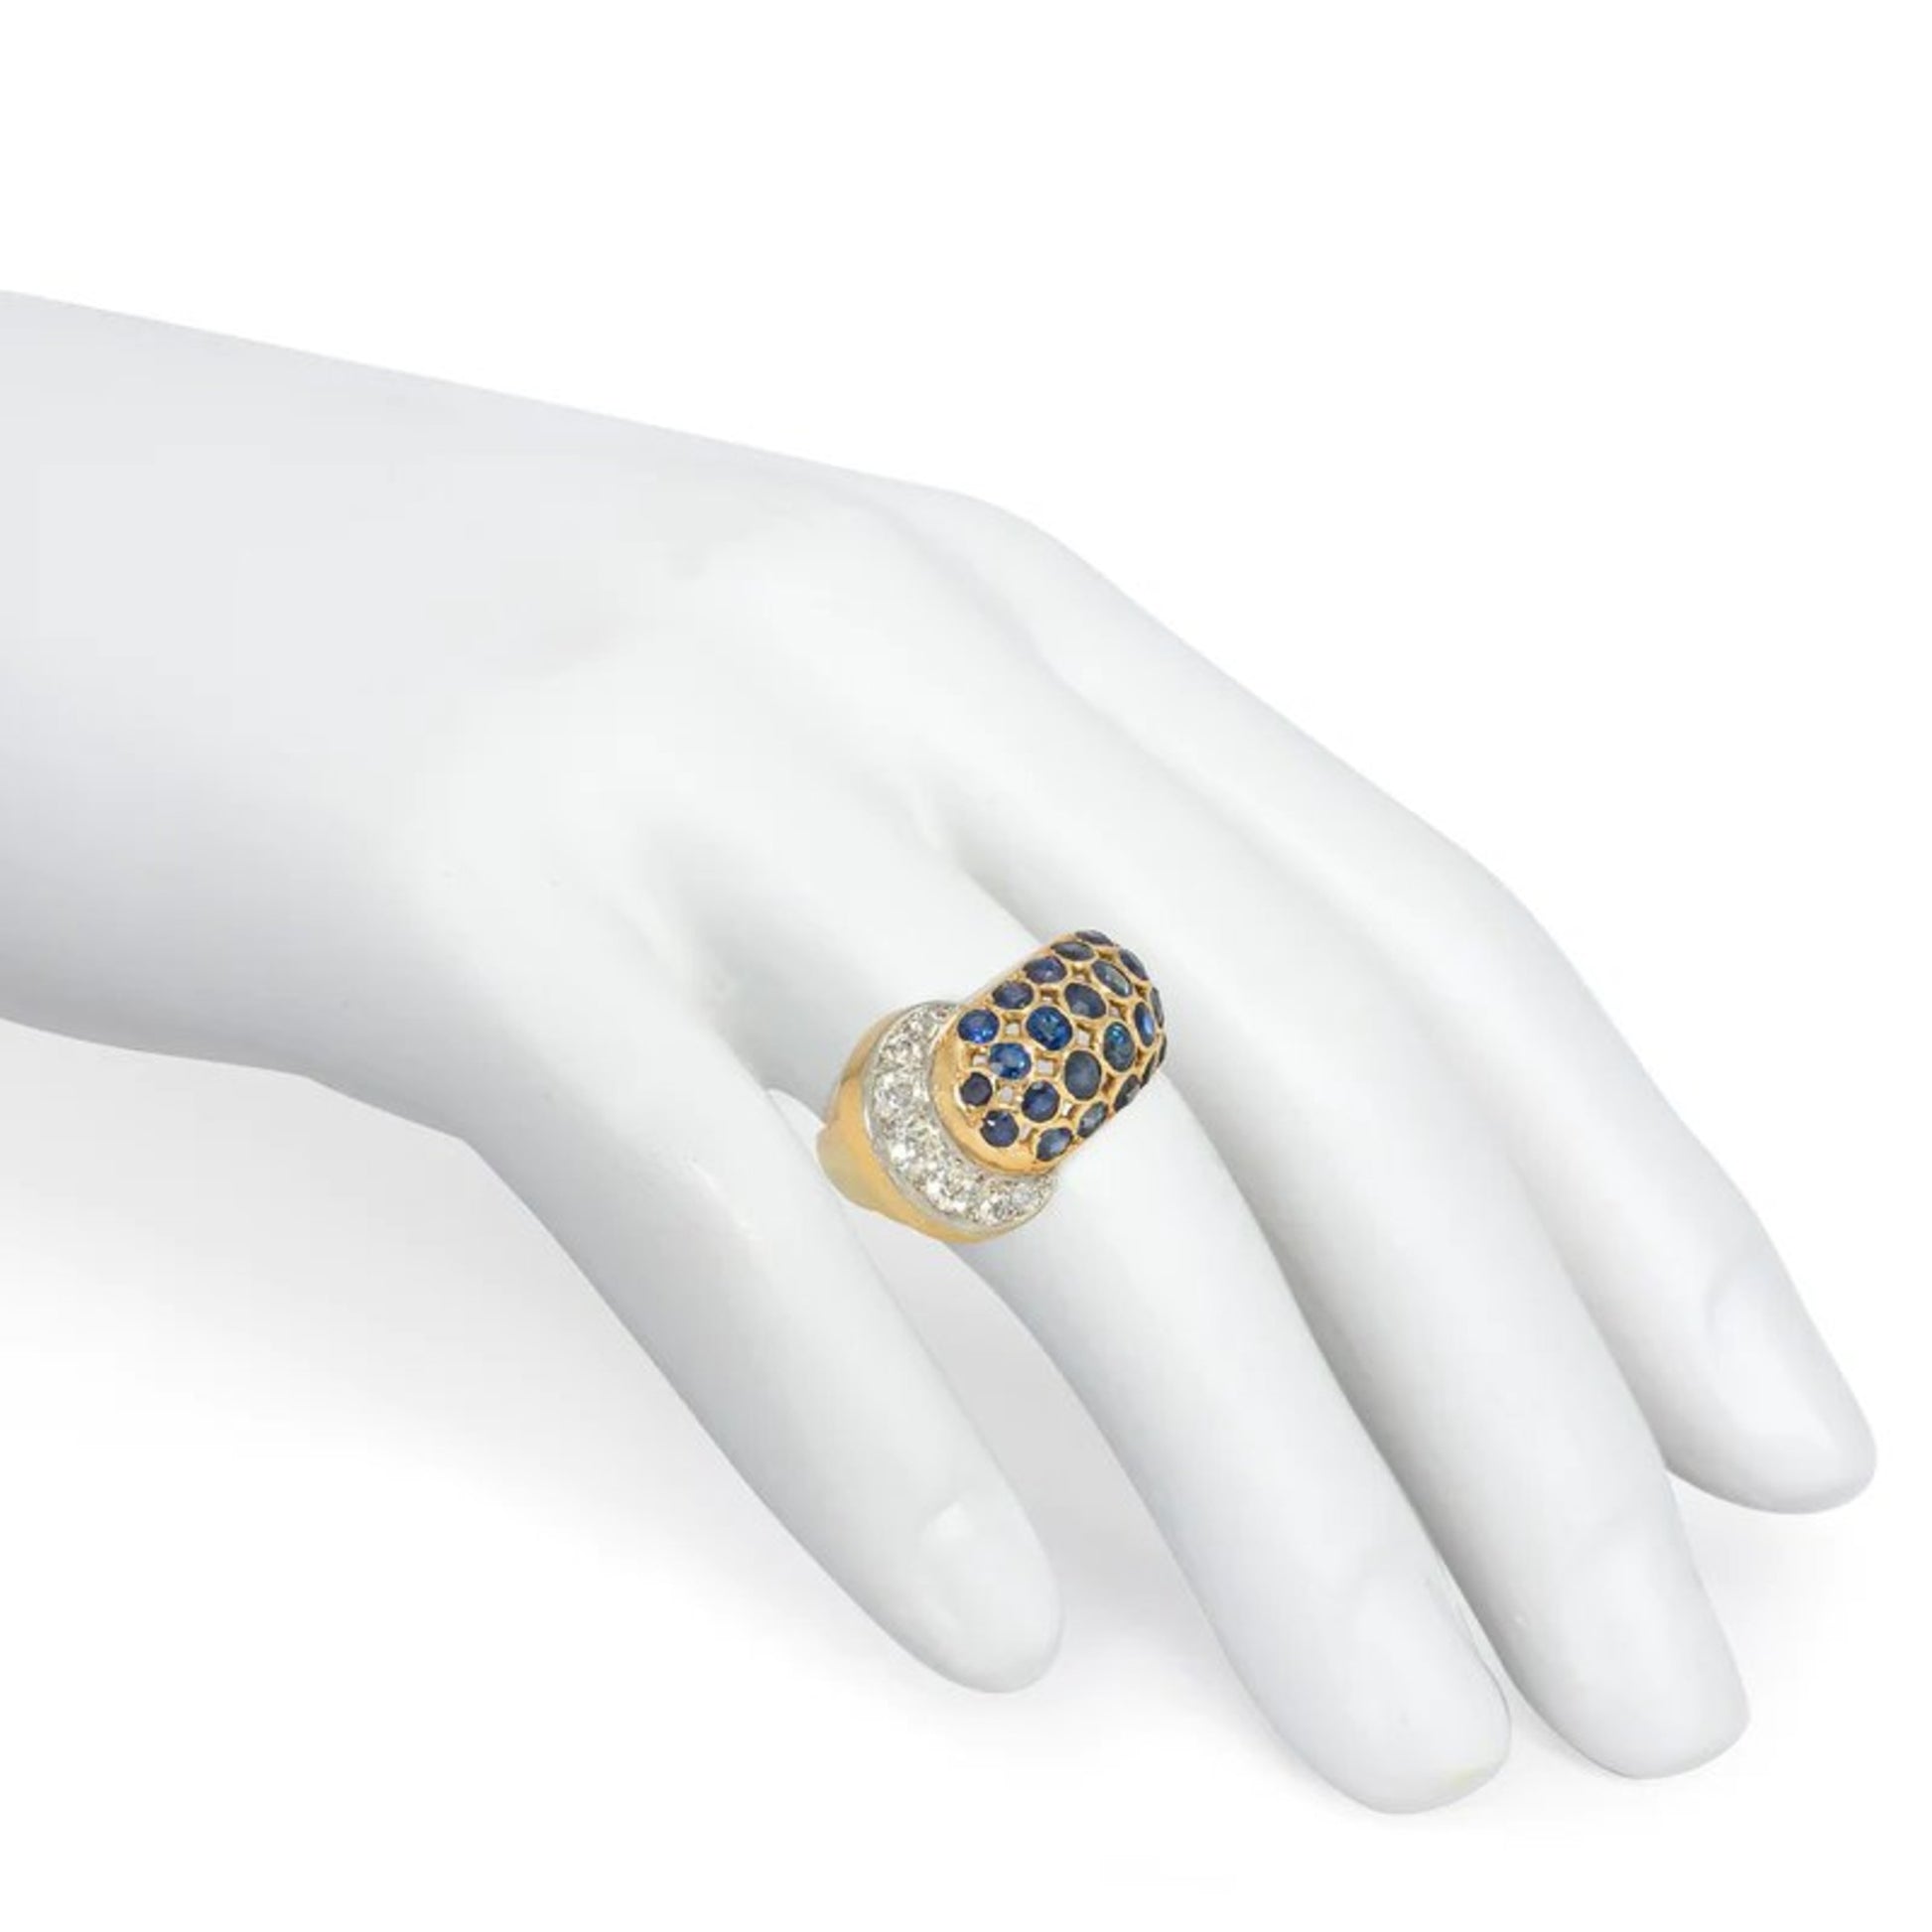 1950s Platinum & 18KT Yellow Gold Sapphire & Diamond Buckle Ring on finger